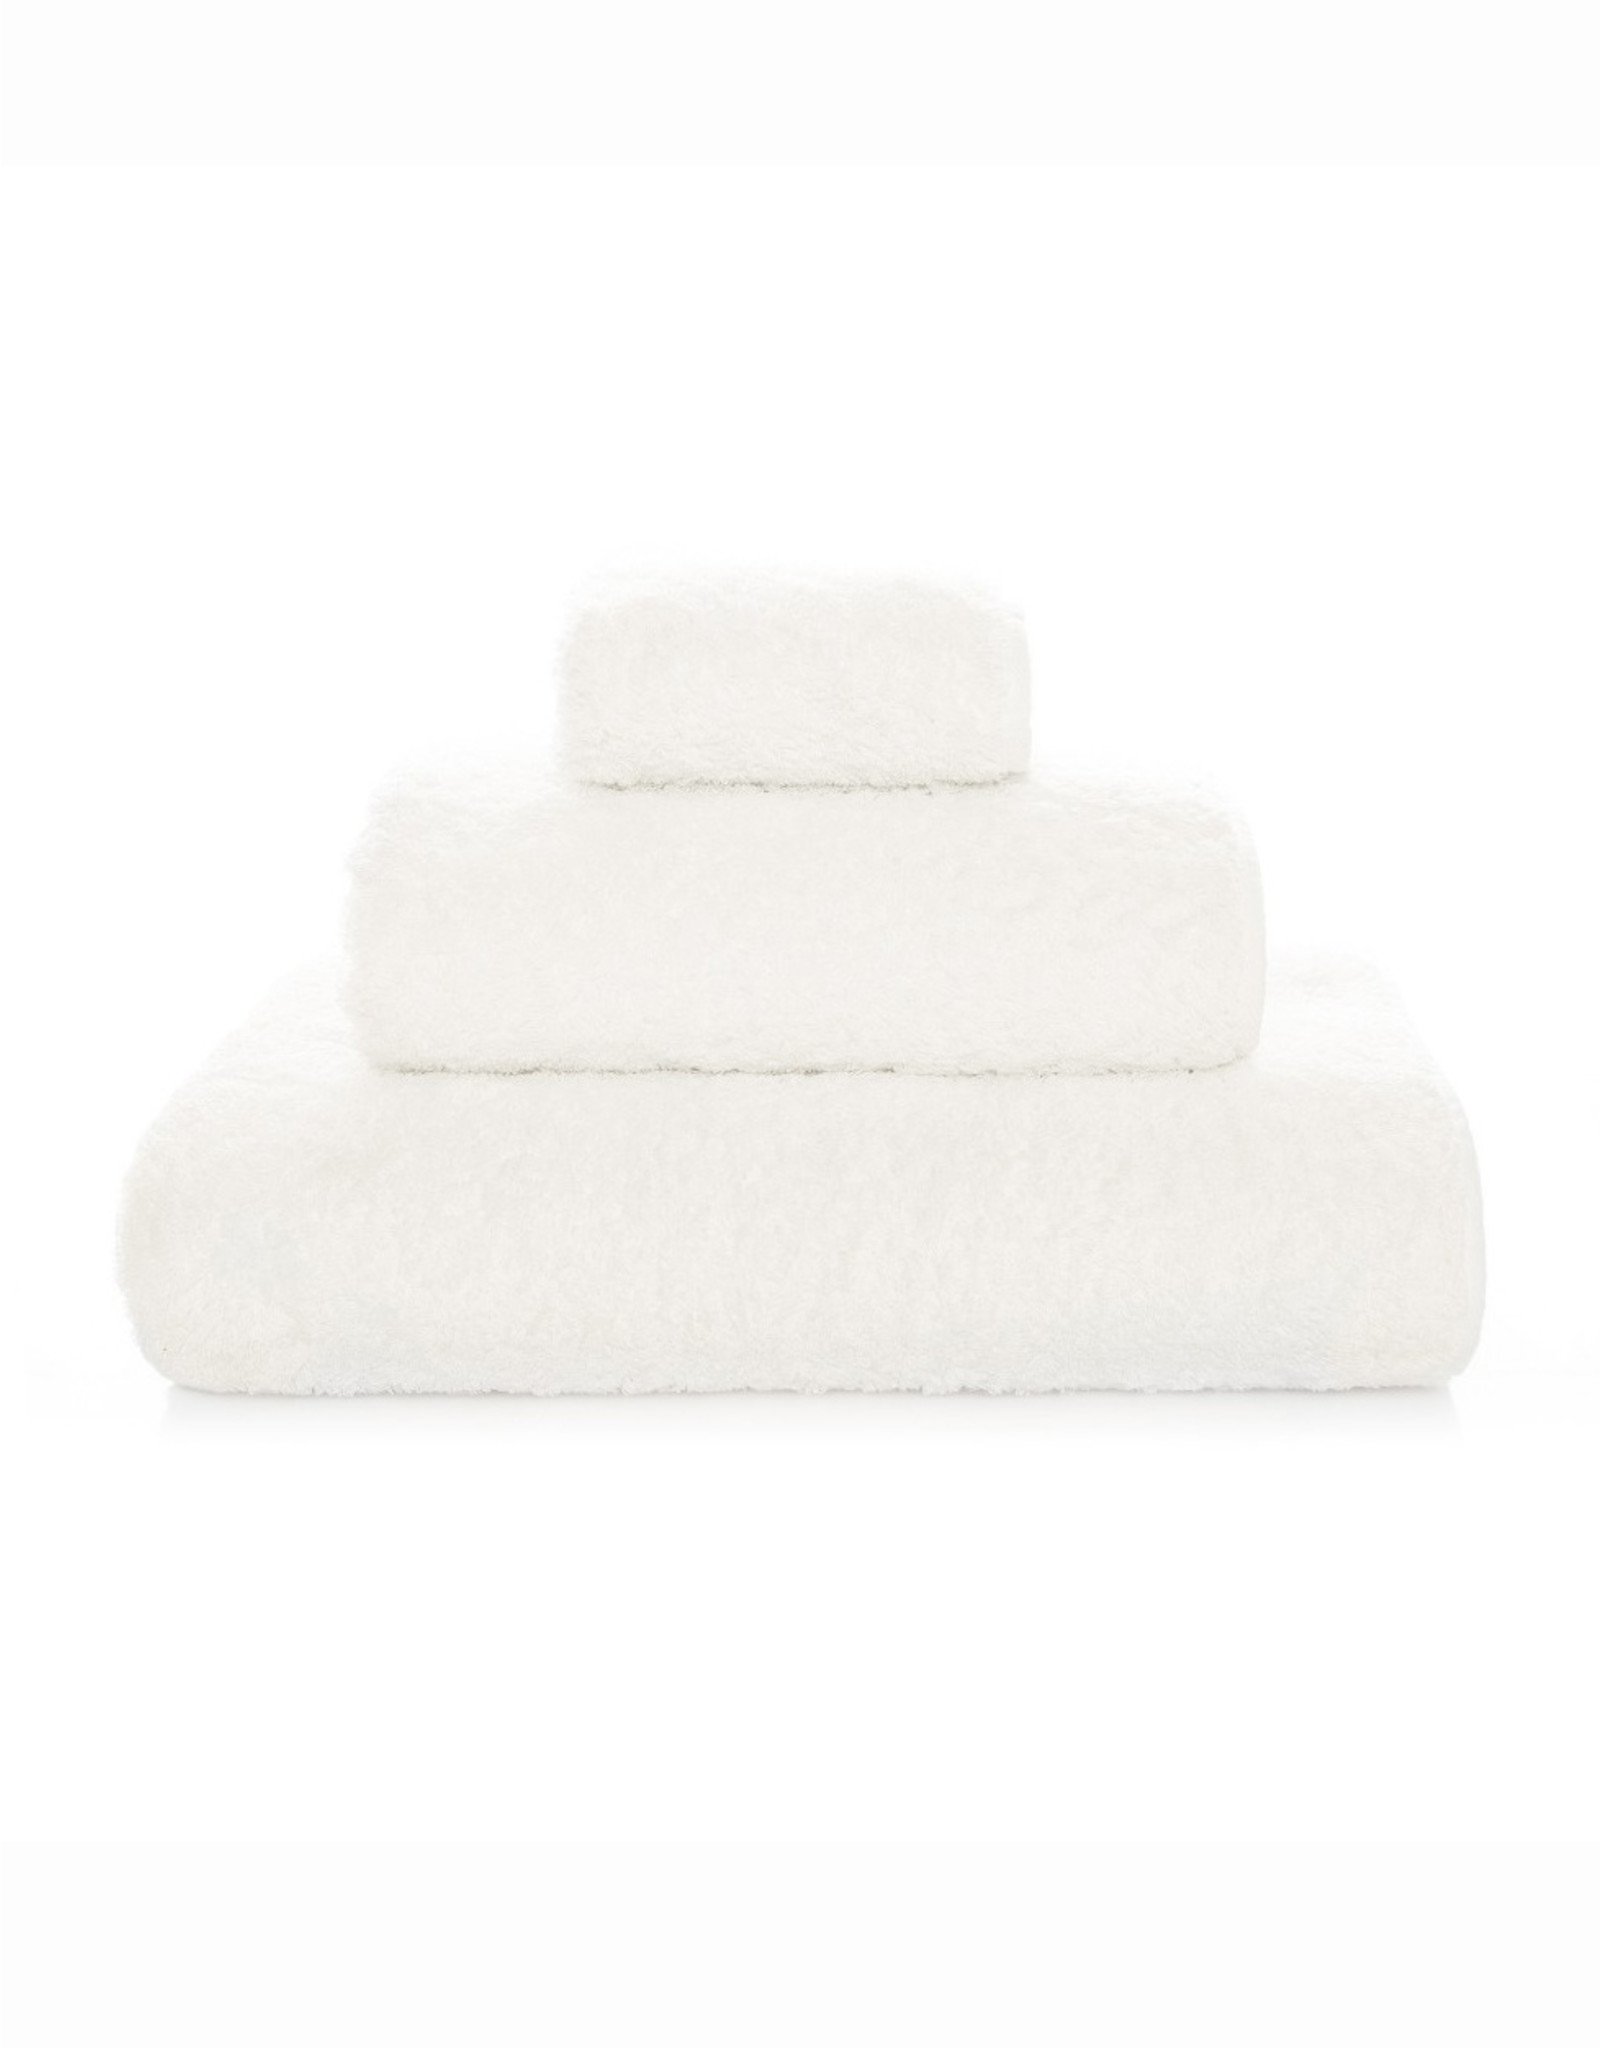 Egoist White Bath Towel 28x55